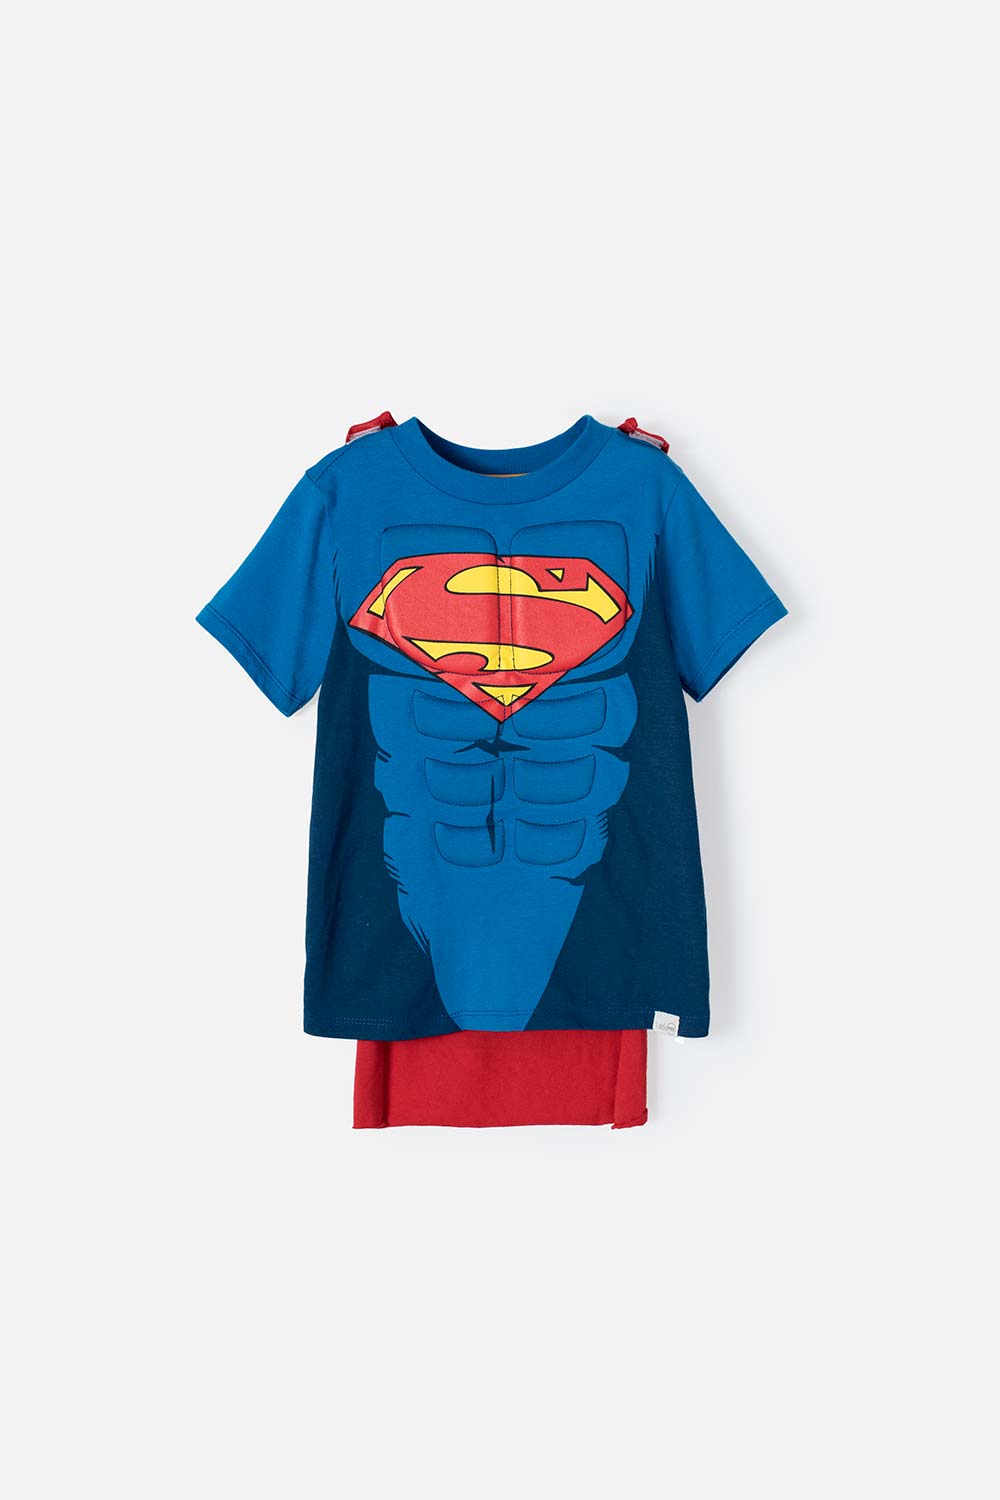 Camiseta de Superman con capa removible para niño de 2T a 5T 2T-0